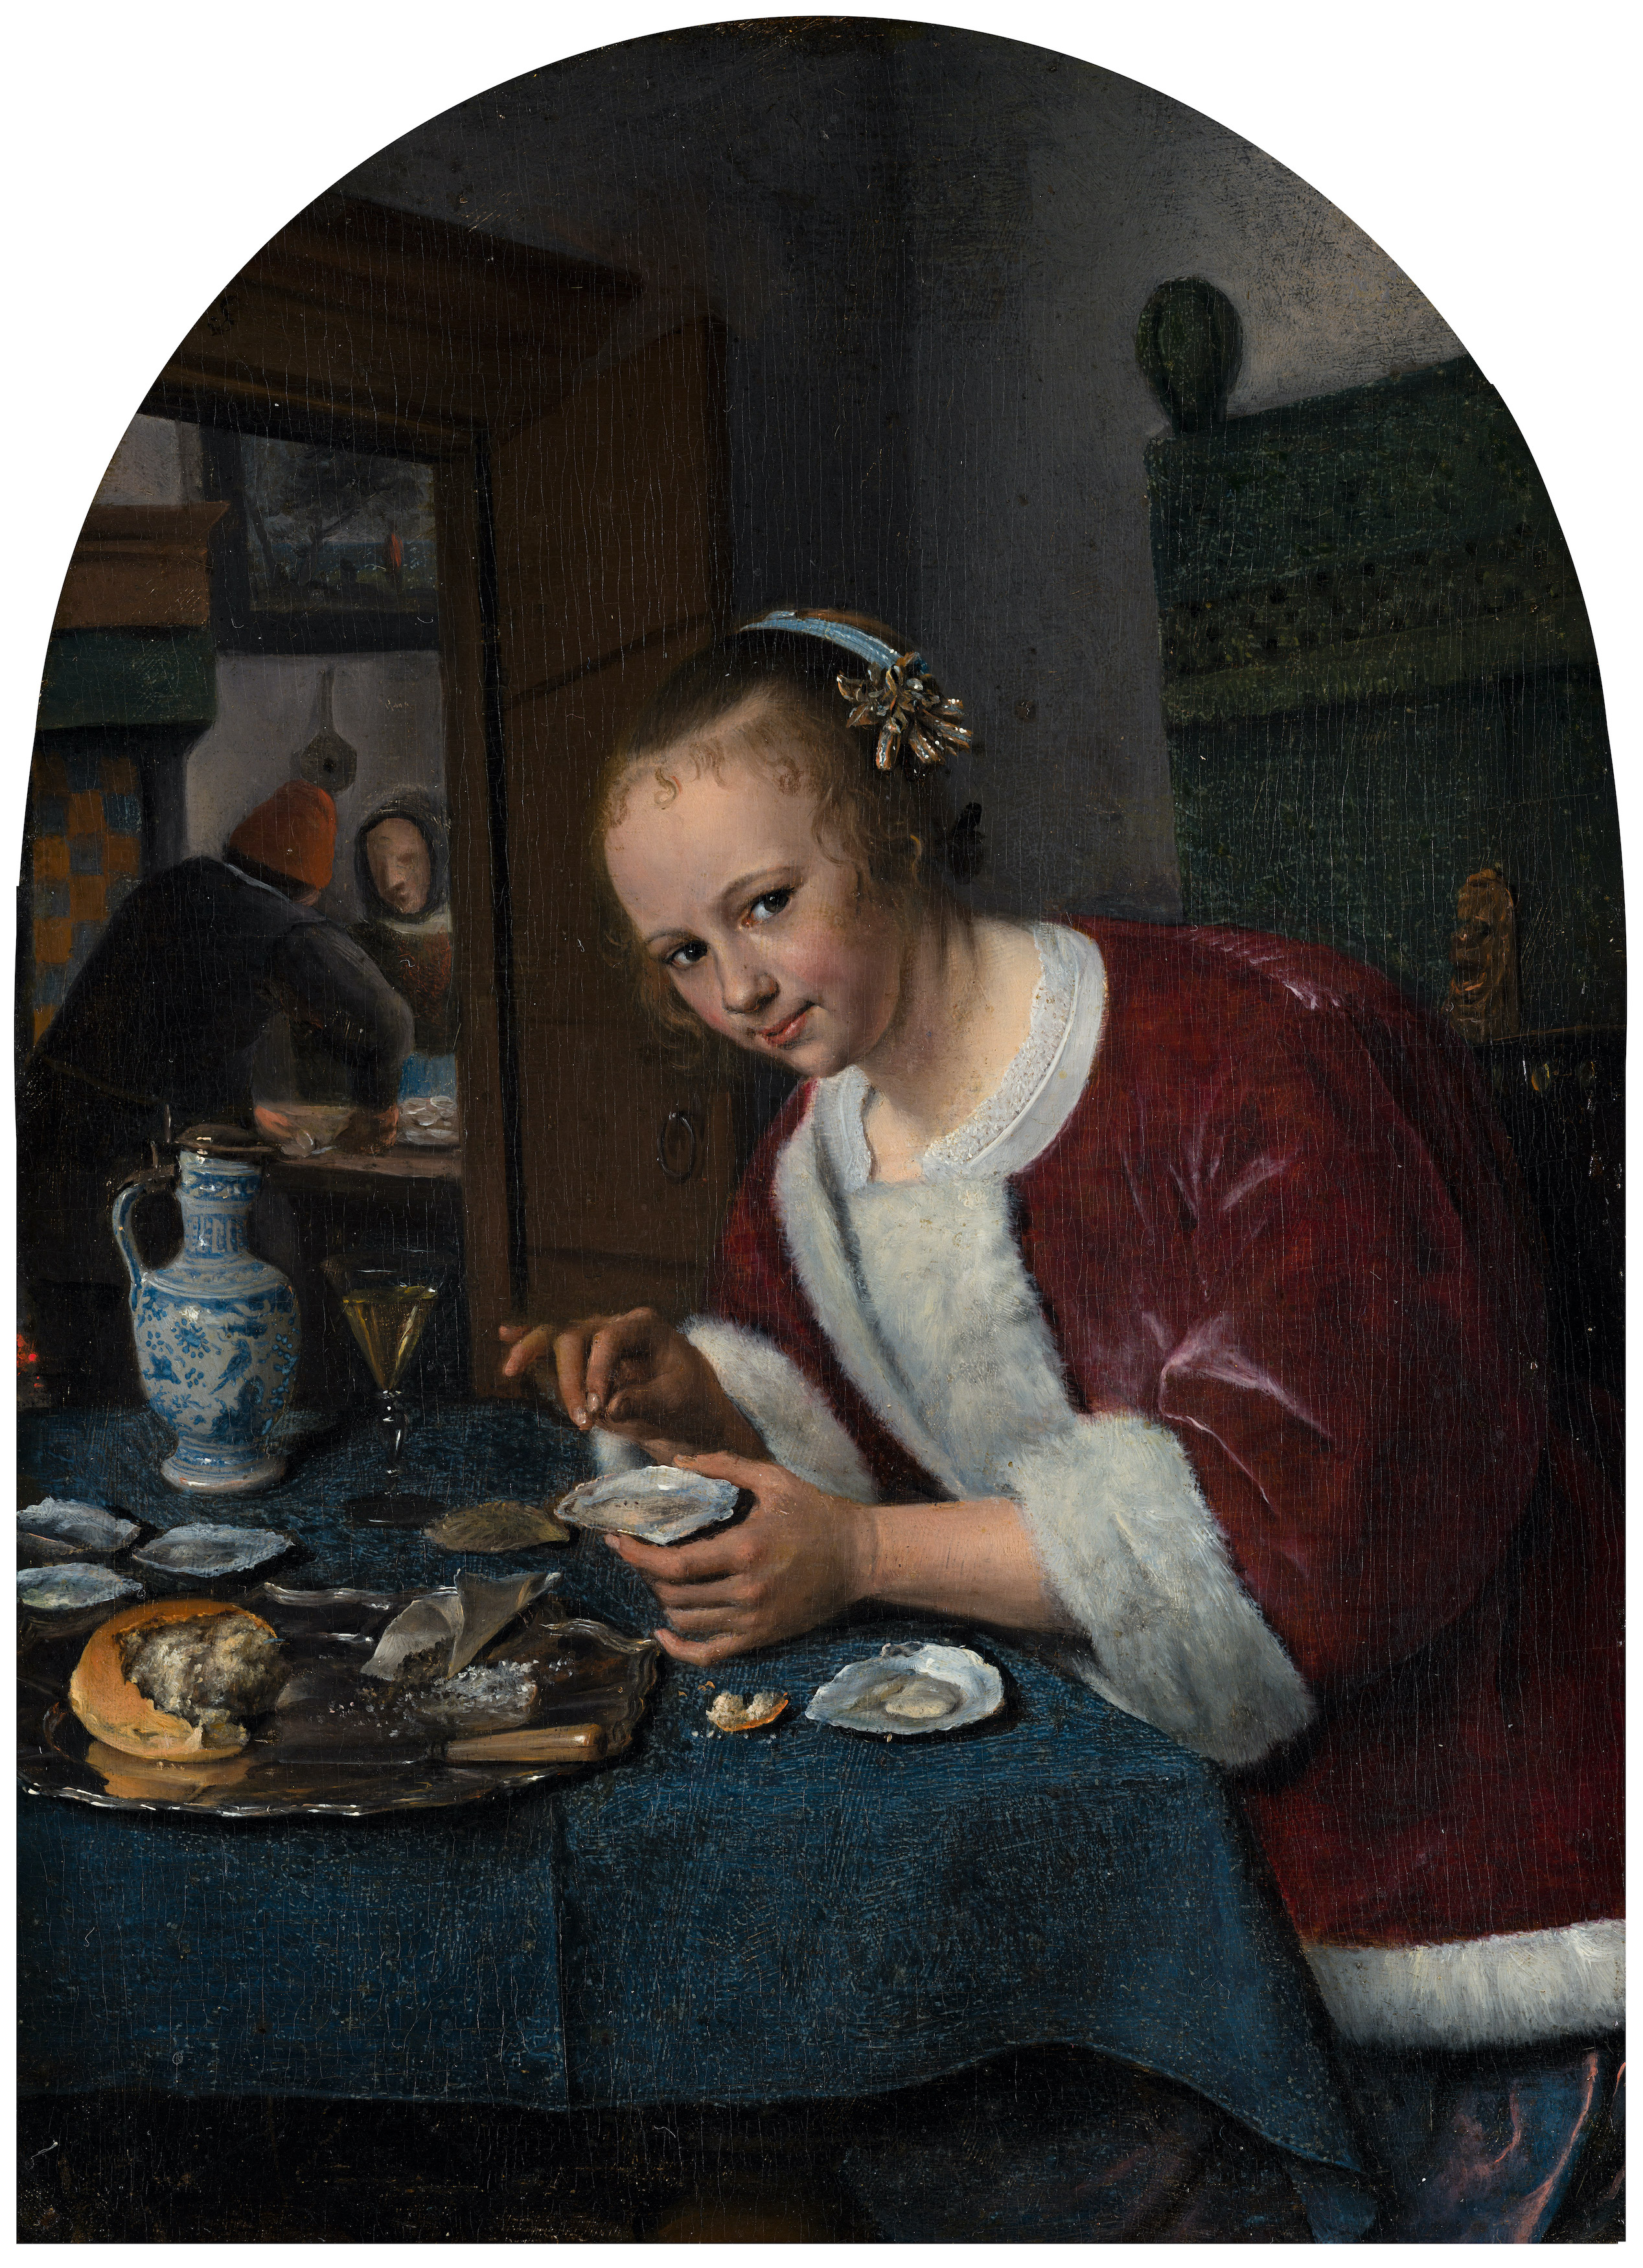 Chica comiendo ostras by Jan Steen - c. 1658 - 1660 - 20,4 x 15,1 cm Mauritshuis, La Haya